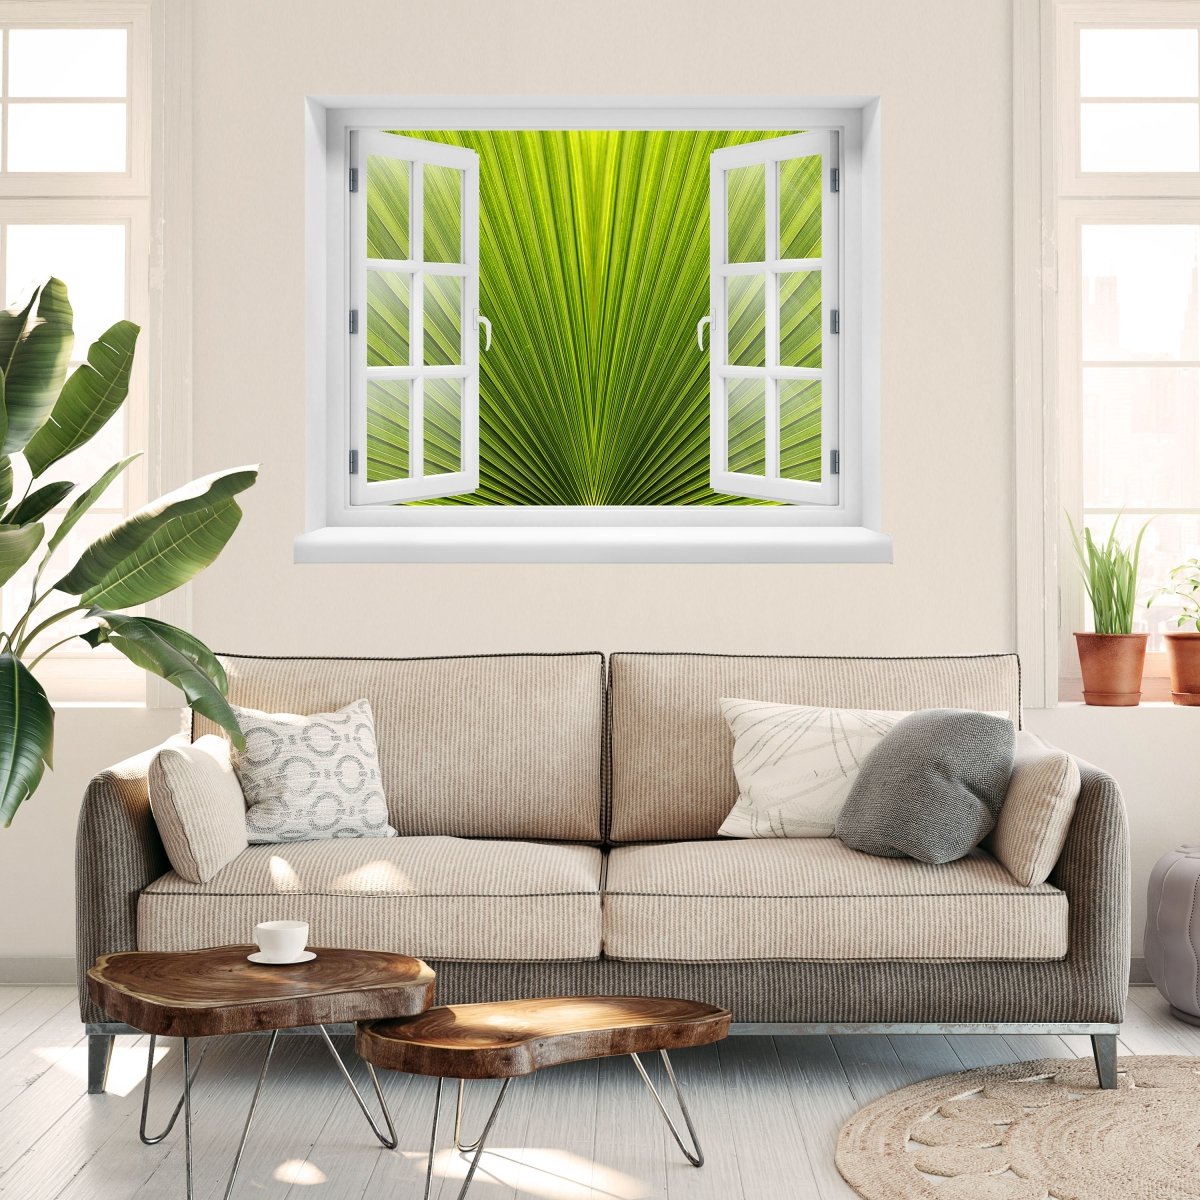 3D wall sticker palm leaf closeup - Wall Decal M1003